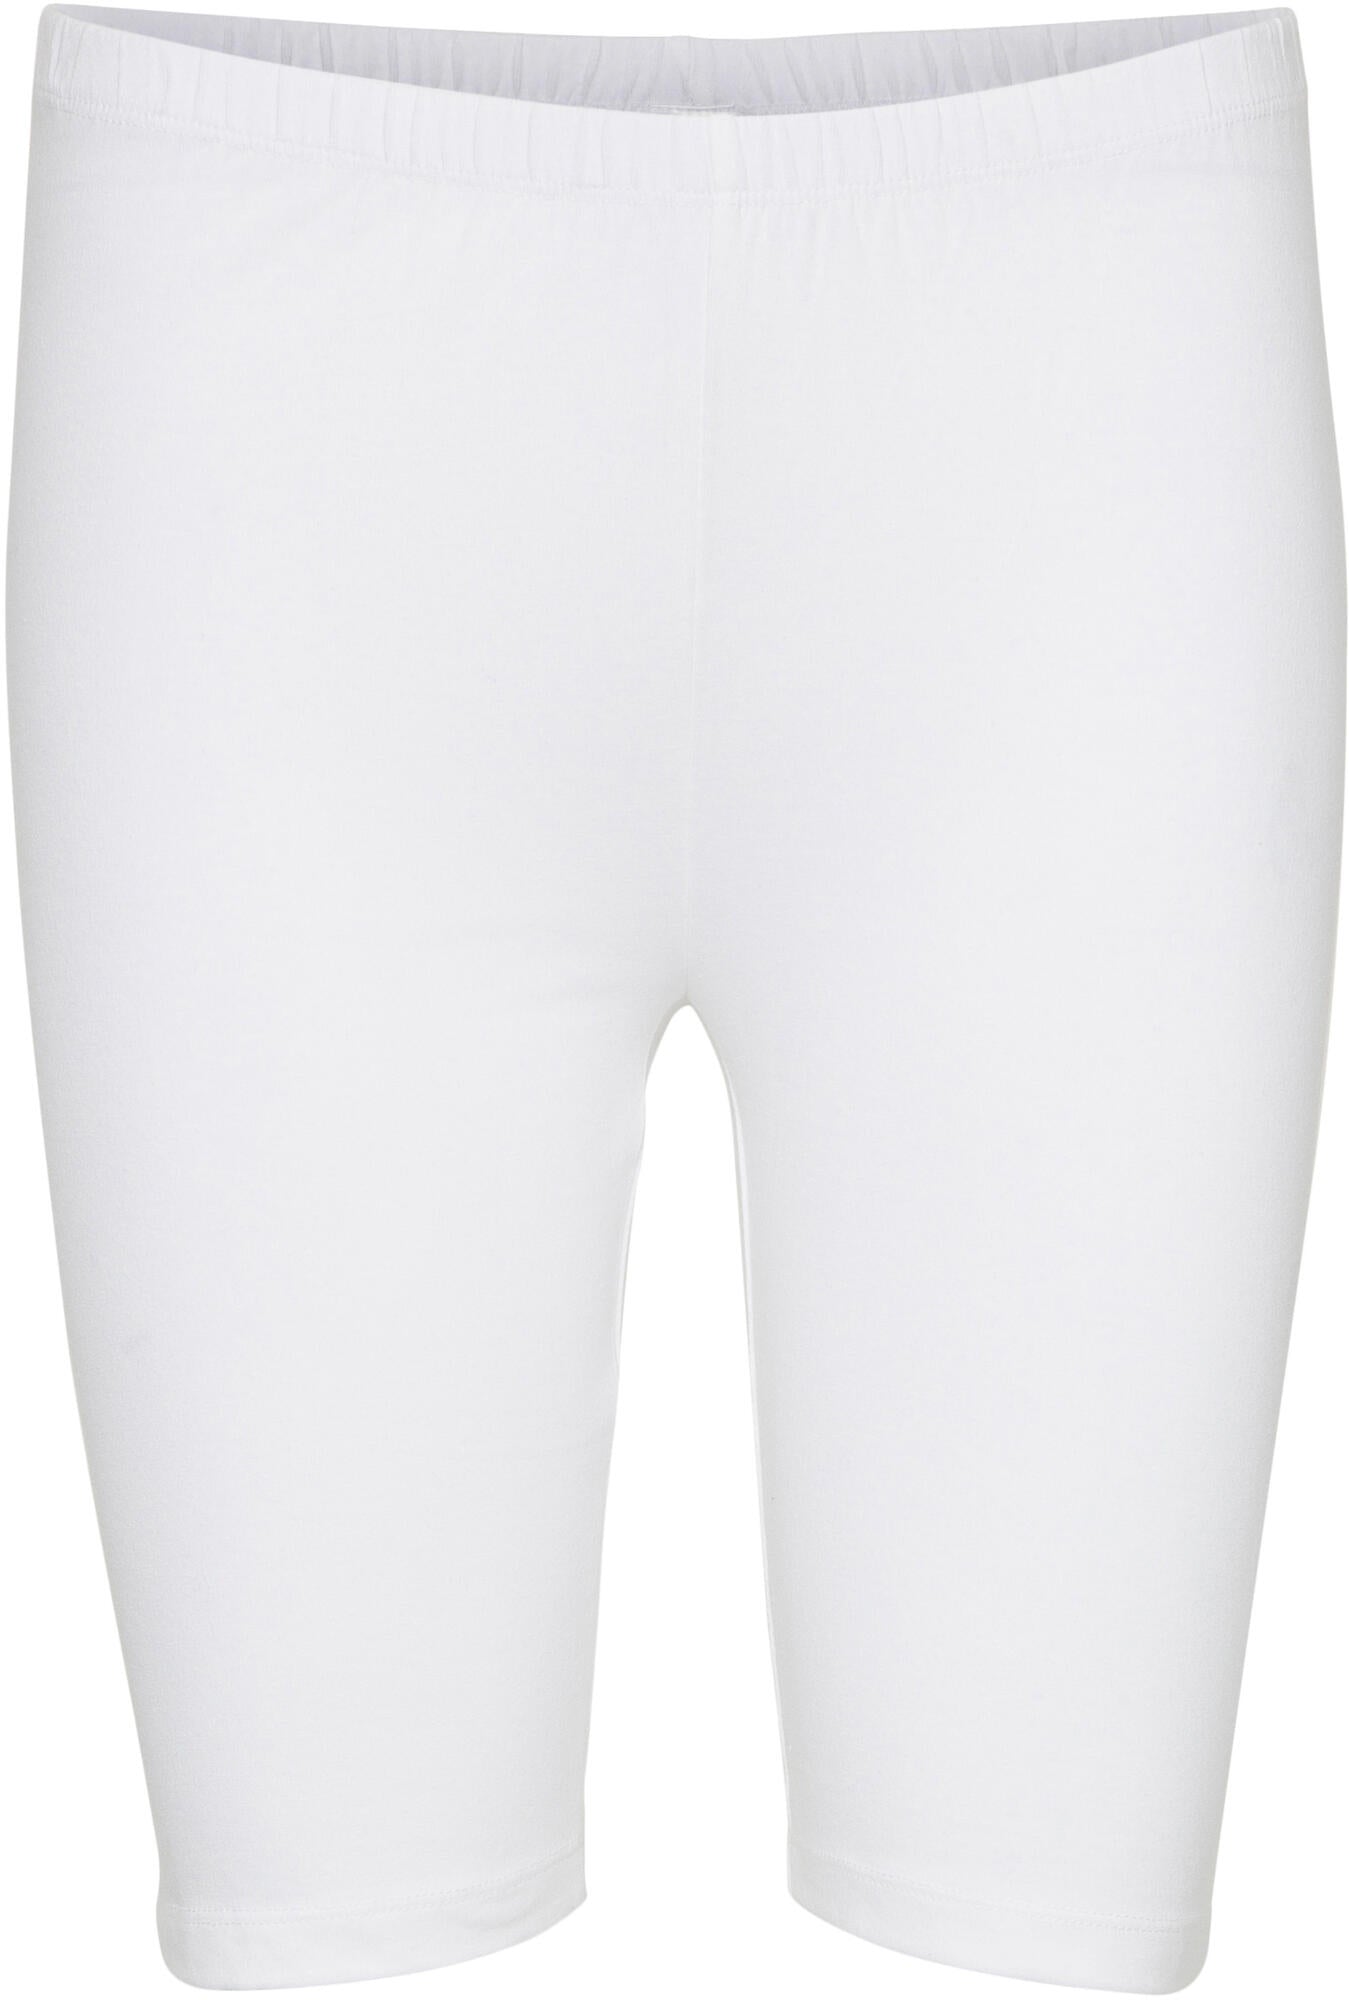 DECOY White Viscose Strech Shorts